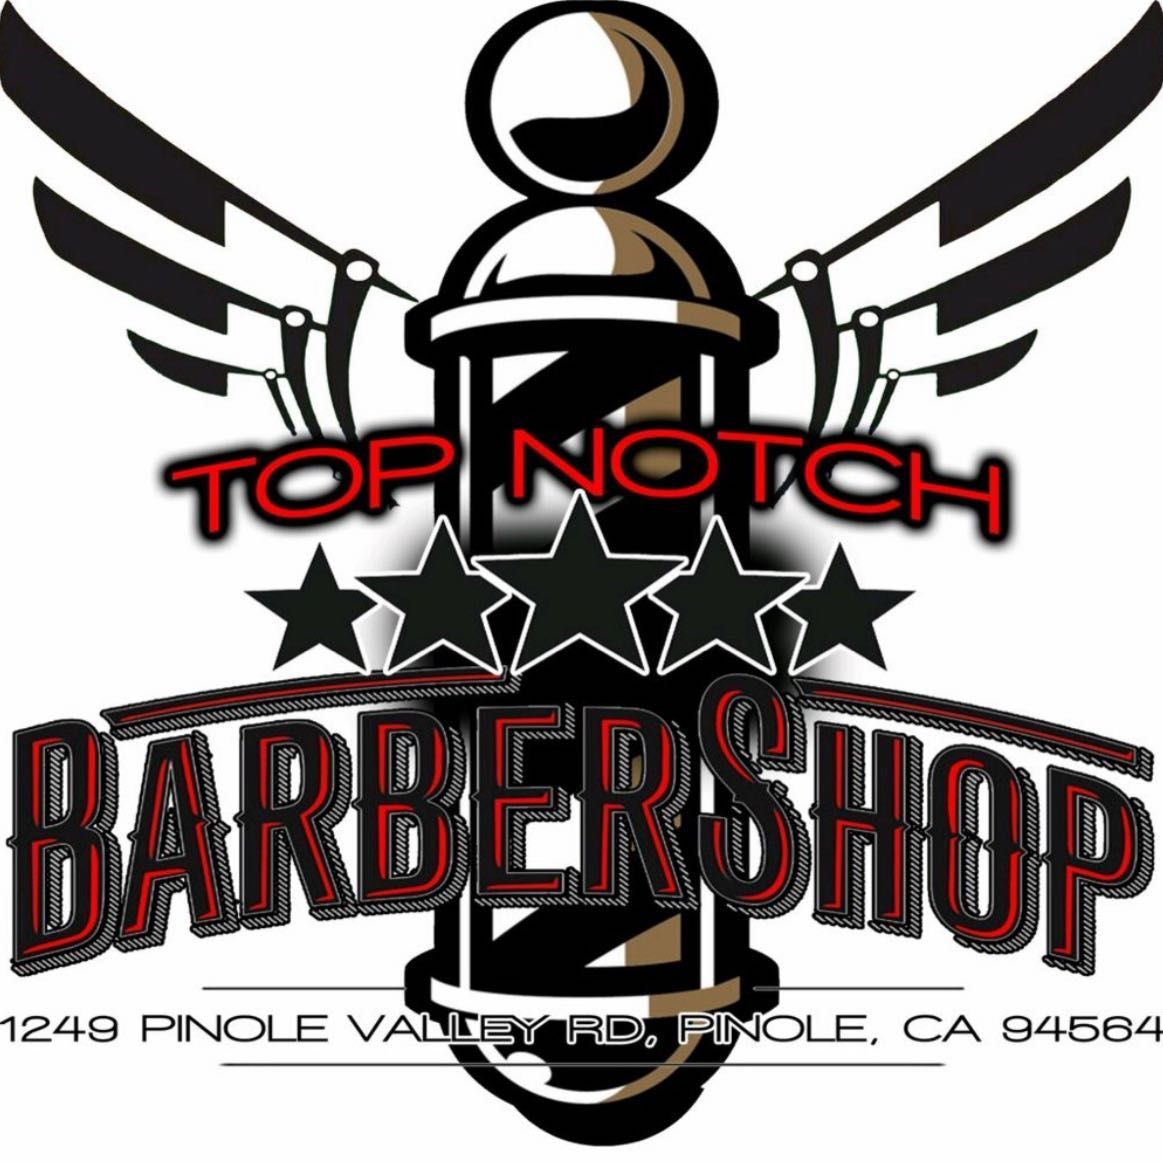 Top Notch barbershop, 1249 Pinole Valley Rd, Pinole, 94564